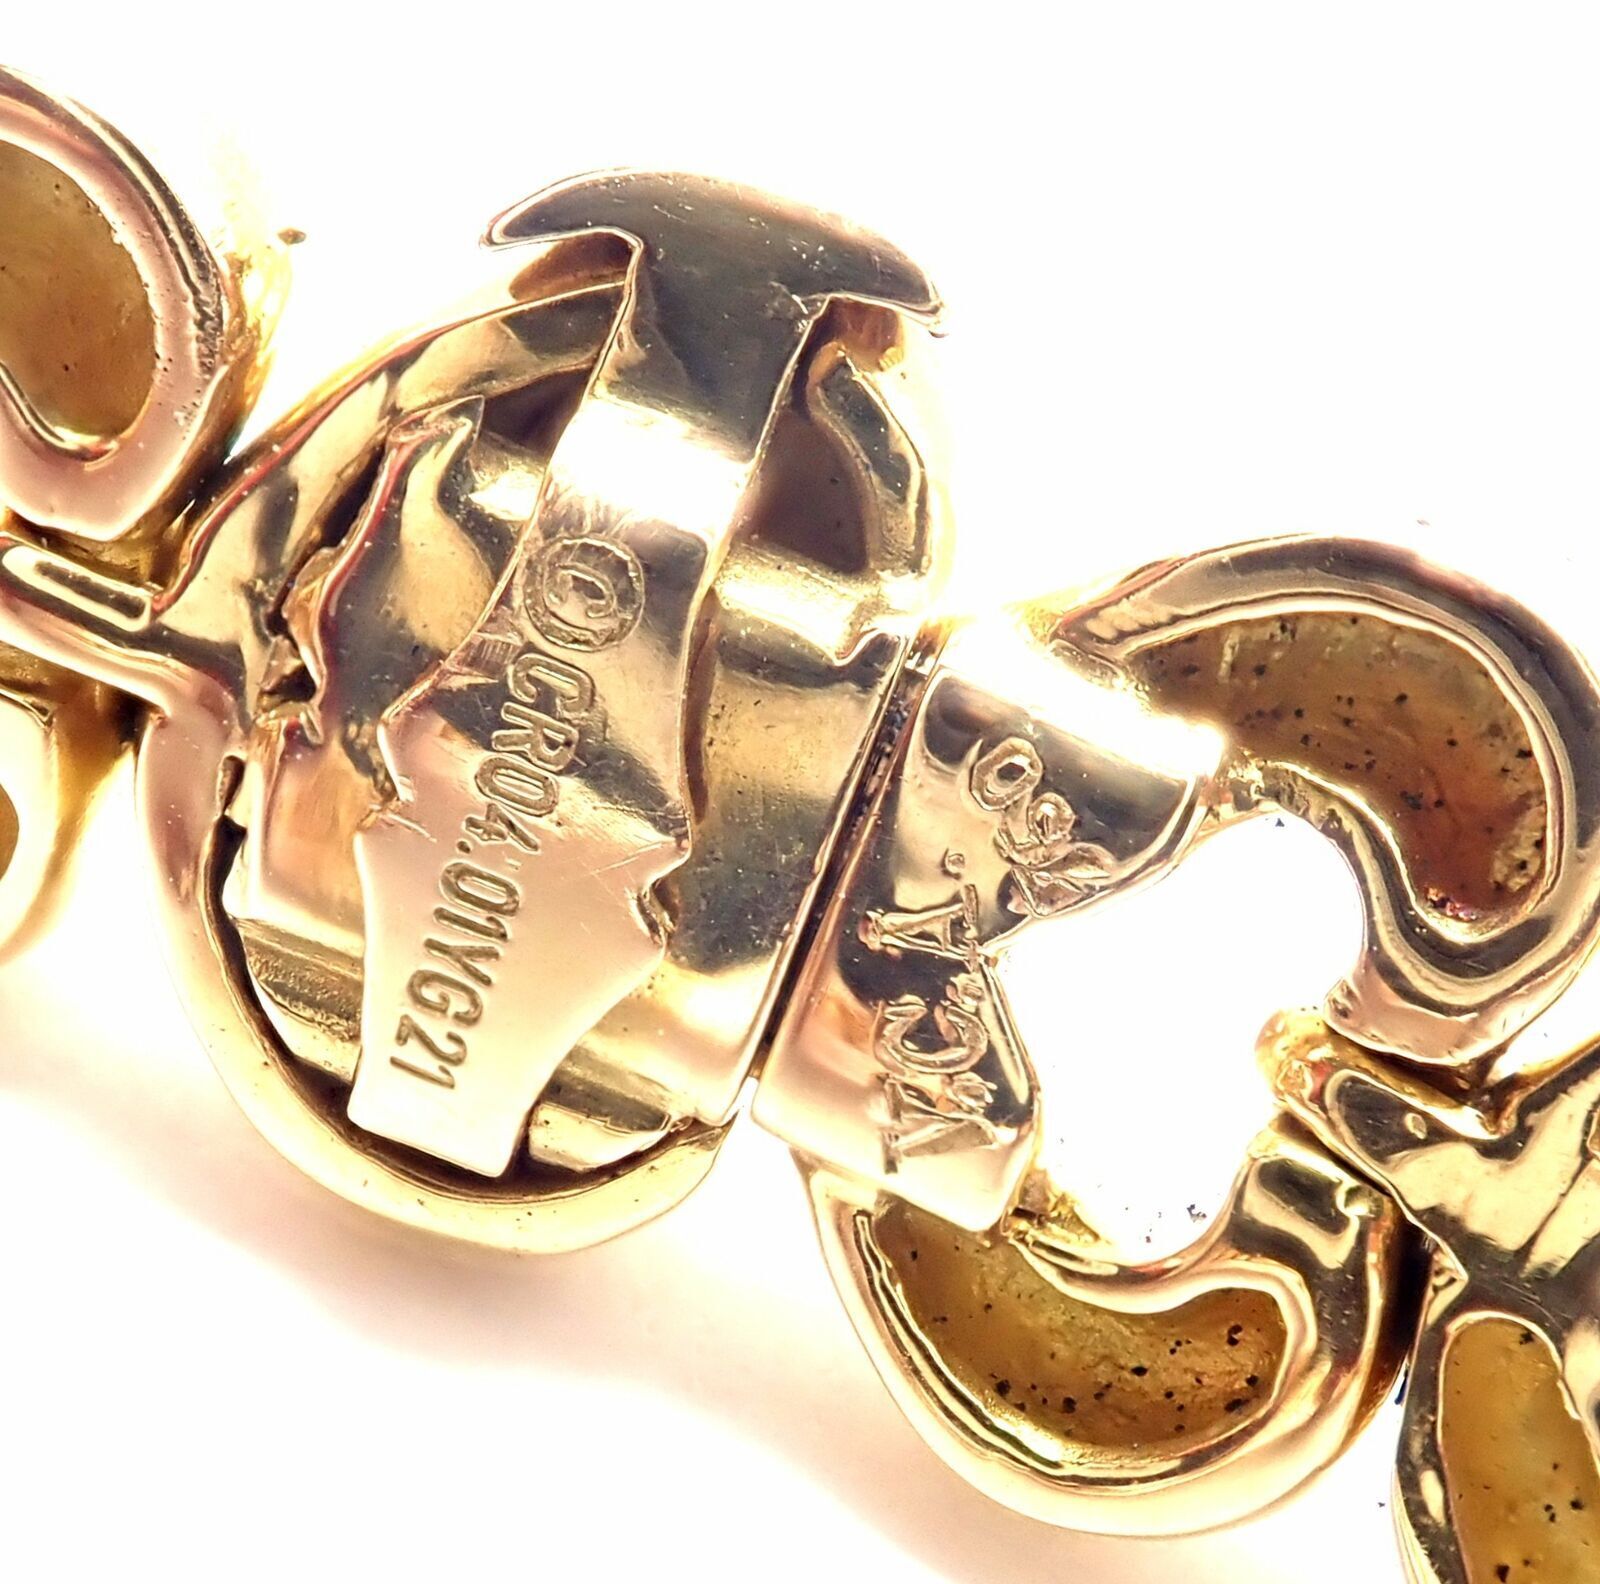 Van Cleef & Arpels Jewelry & Watches:Fine Jewelry:Necklaces & Pendants Rare! Authentic Van Cleef & Arpels 18k Yellow Gold Heart Choker Necklace